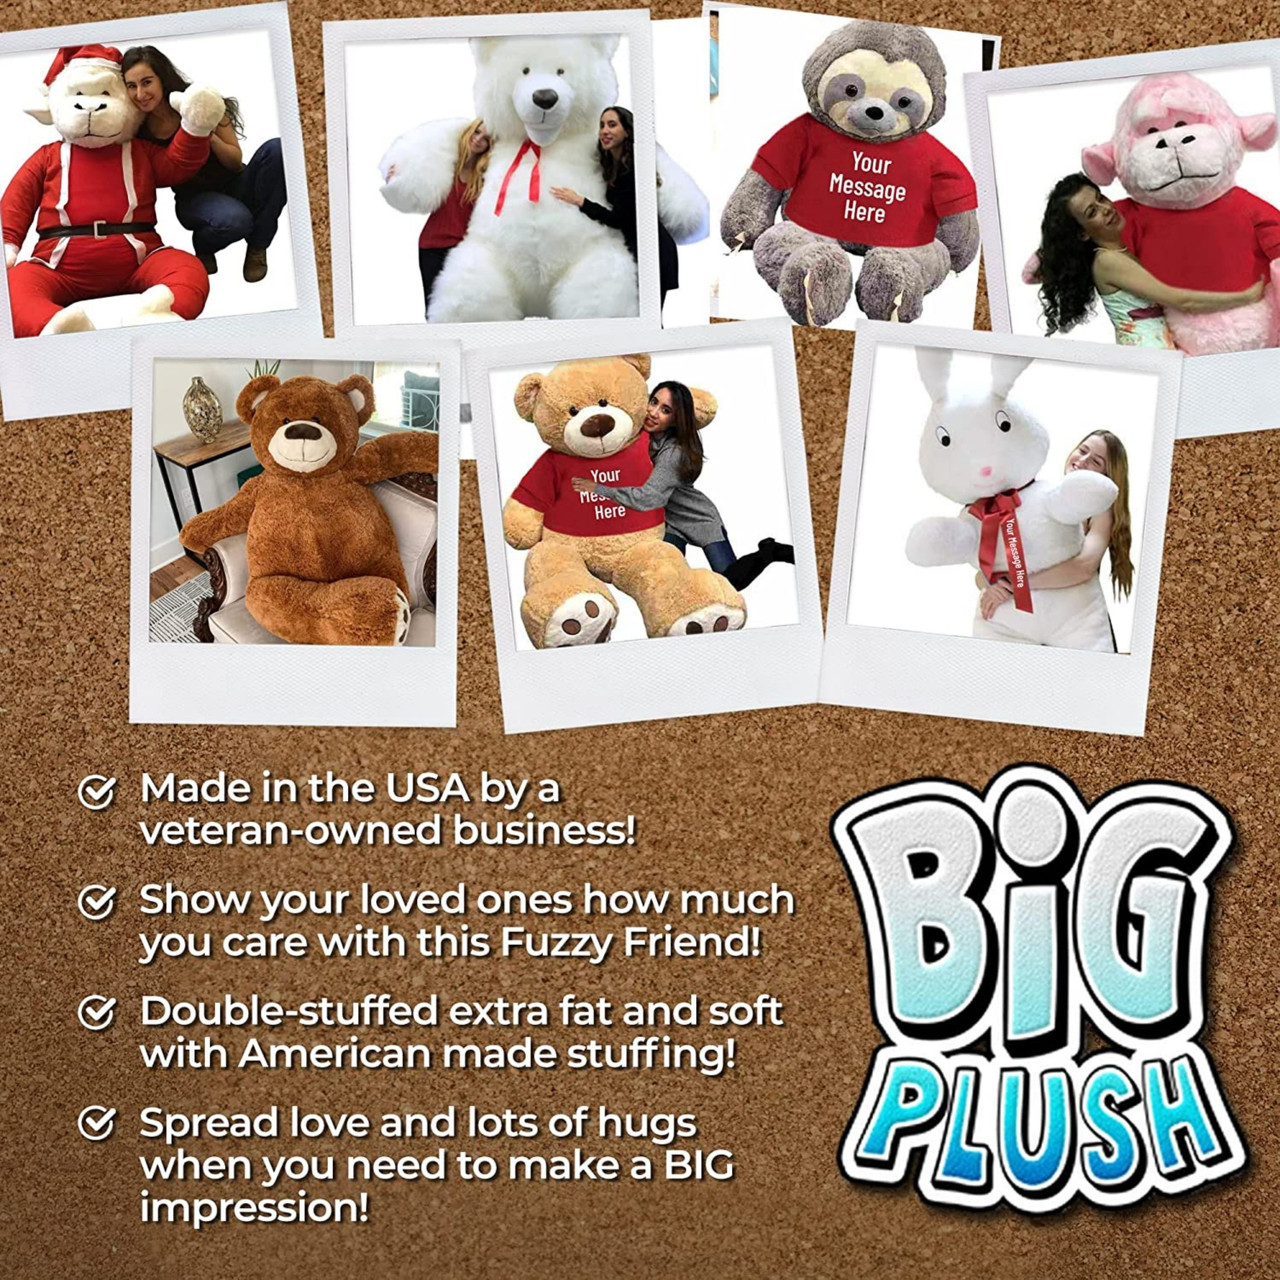 Big Teddy Bear - R1 - 00055502634